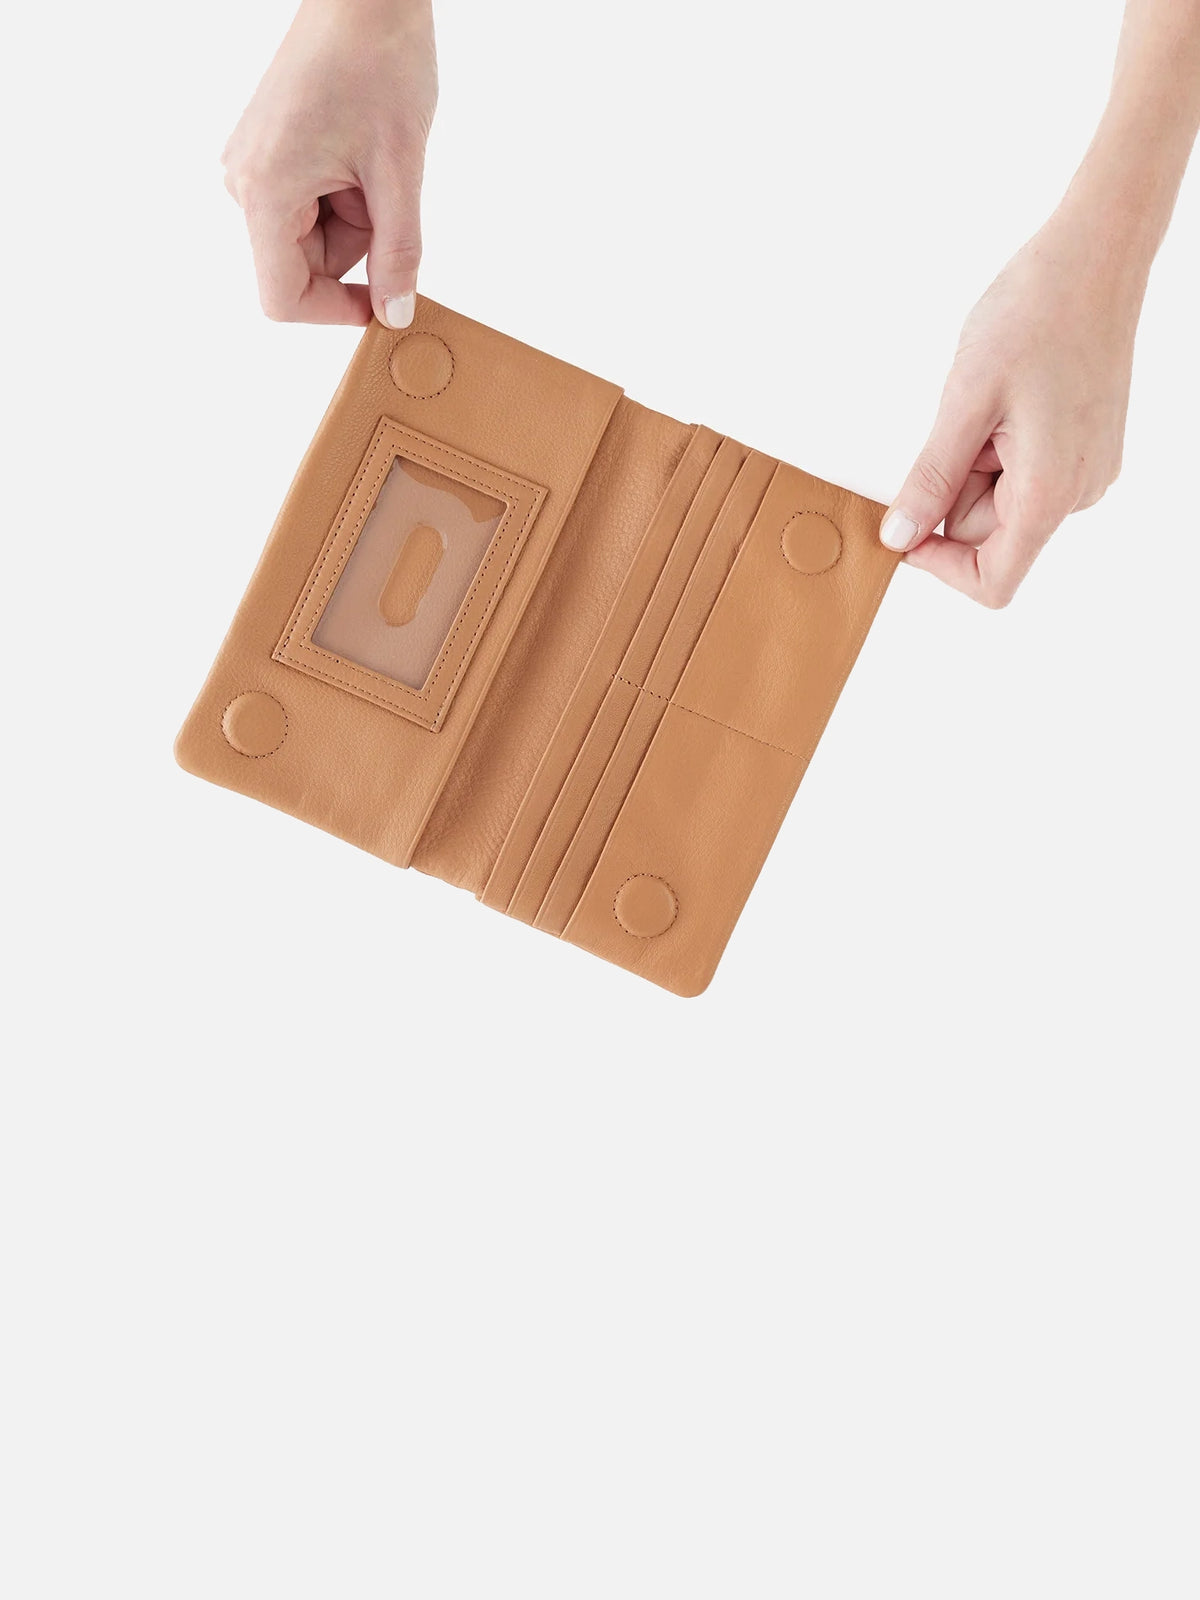 hobo lumen continental wallet in sandstorm pebbled leather